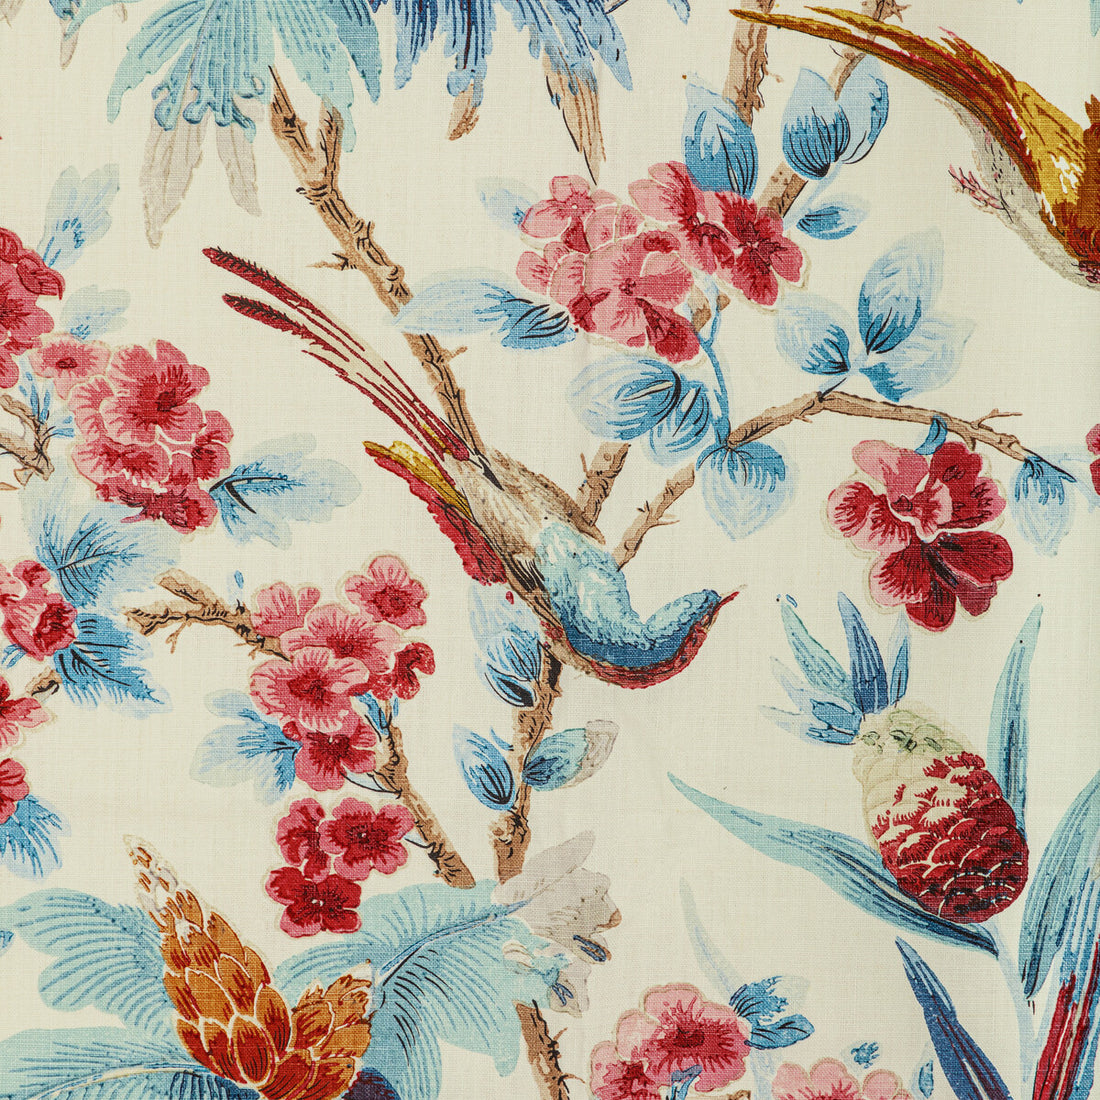 Gastaud Print fabric in aqua/berry color - pattern 8022120.1319.0 - by Brunschwig &amp; Fils